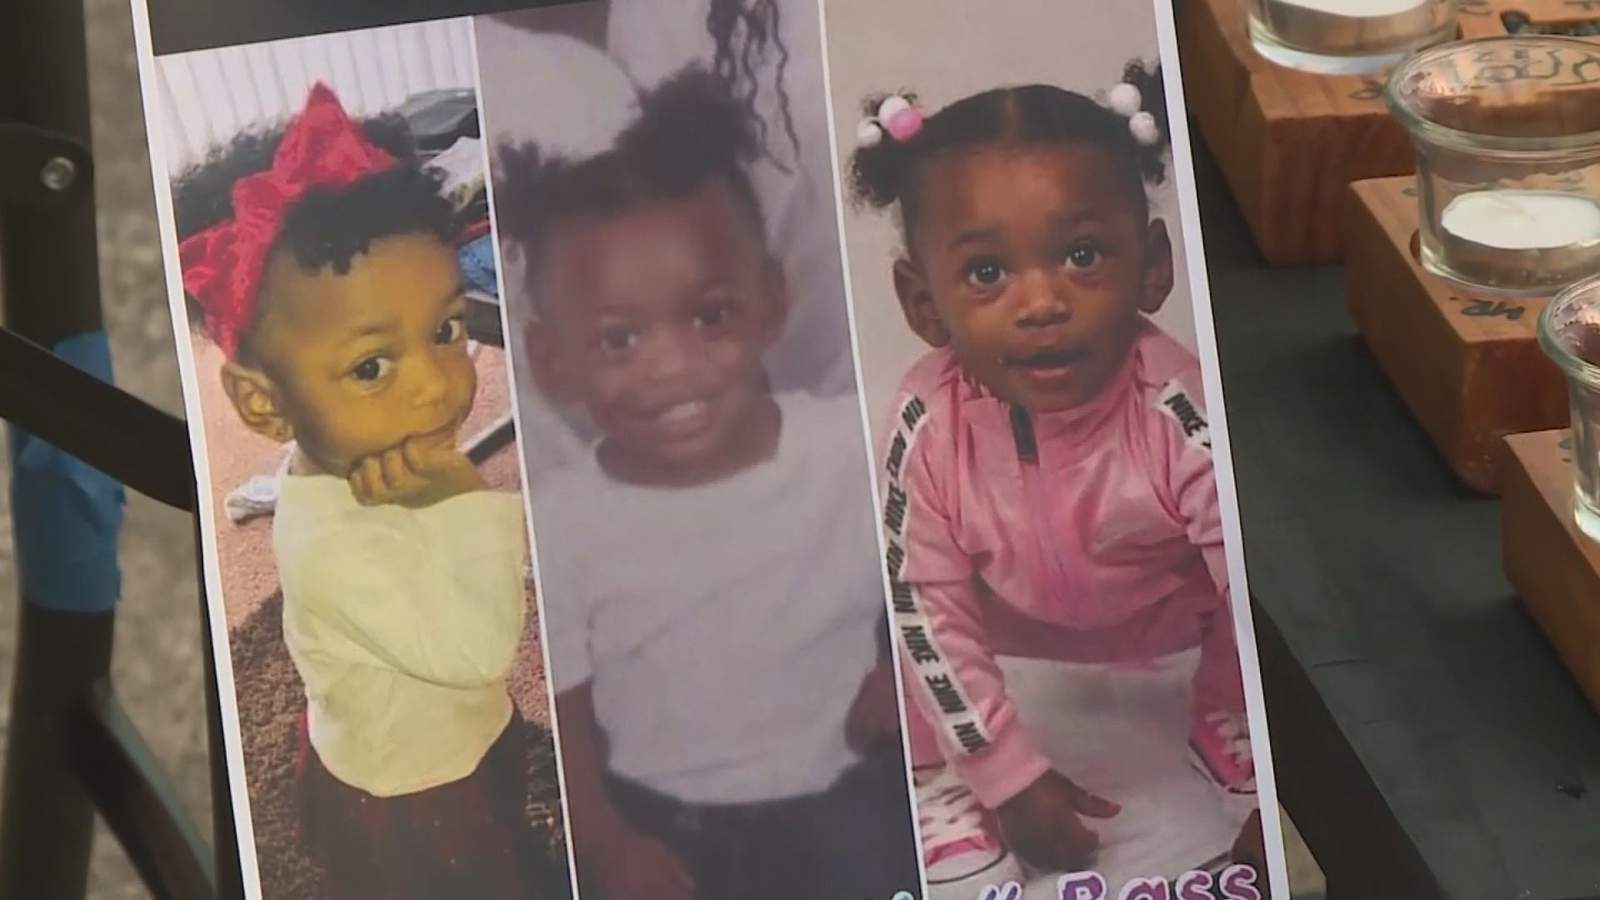 Family says body found in Brays Bayou belonged to 2-year-old Maliyah Bass